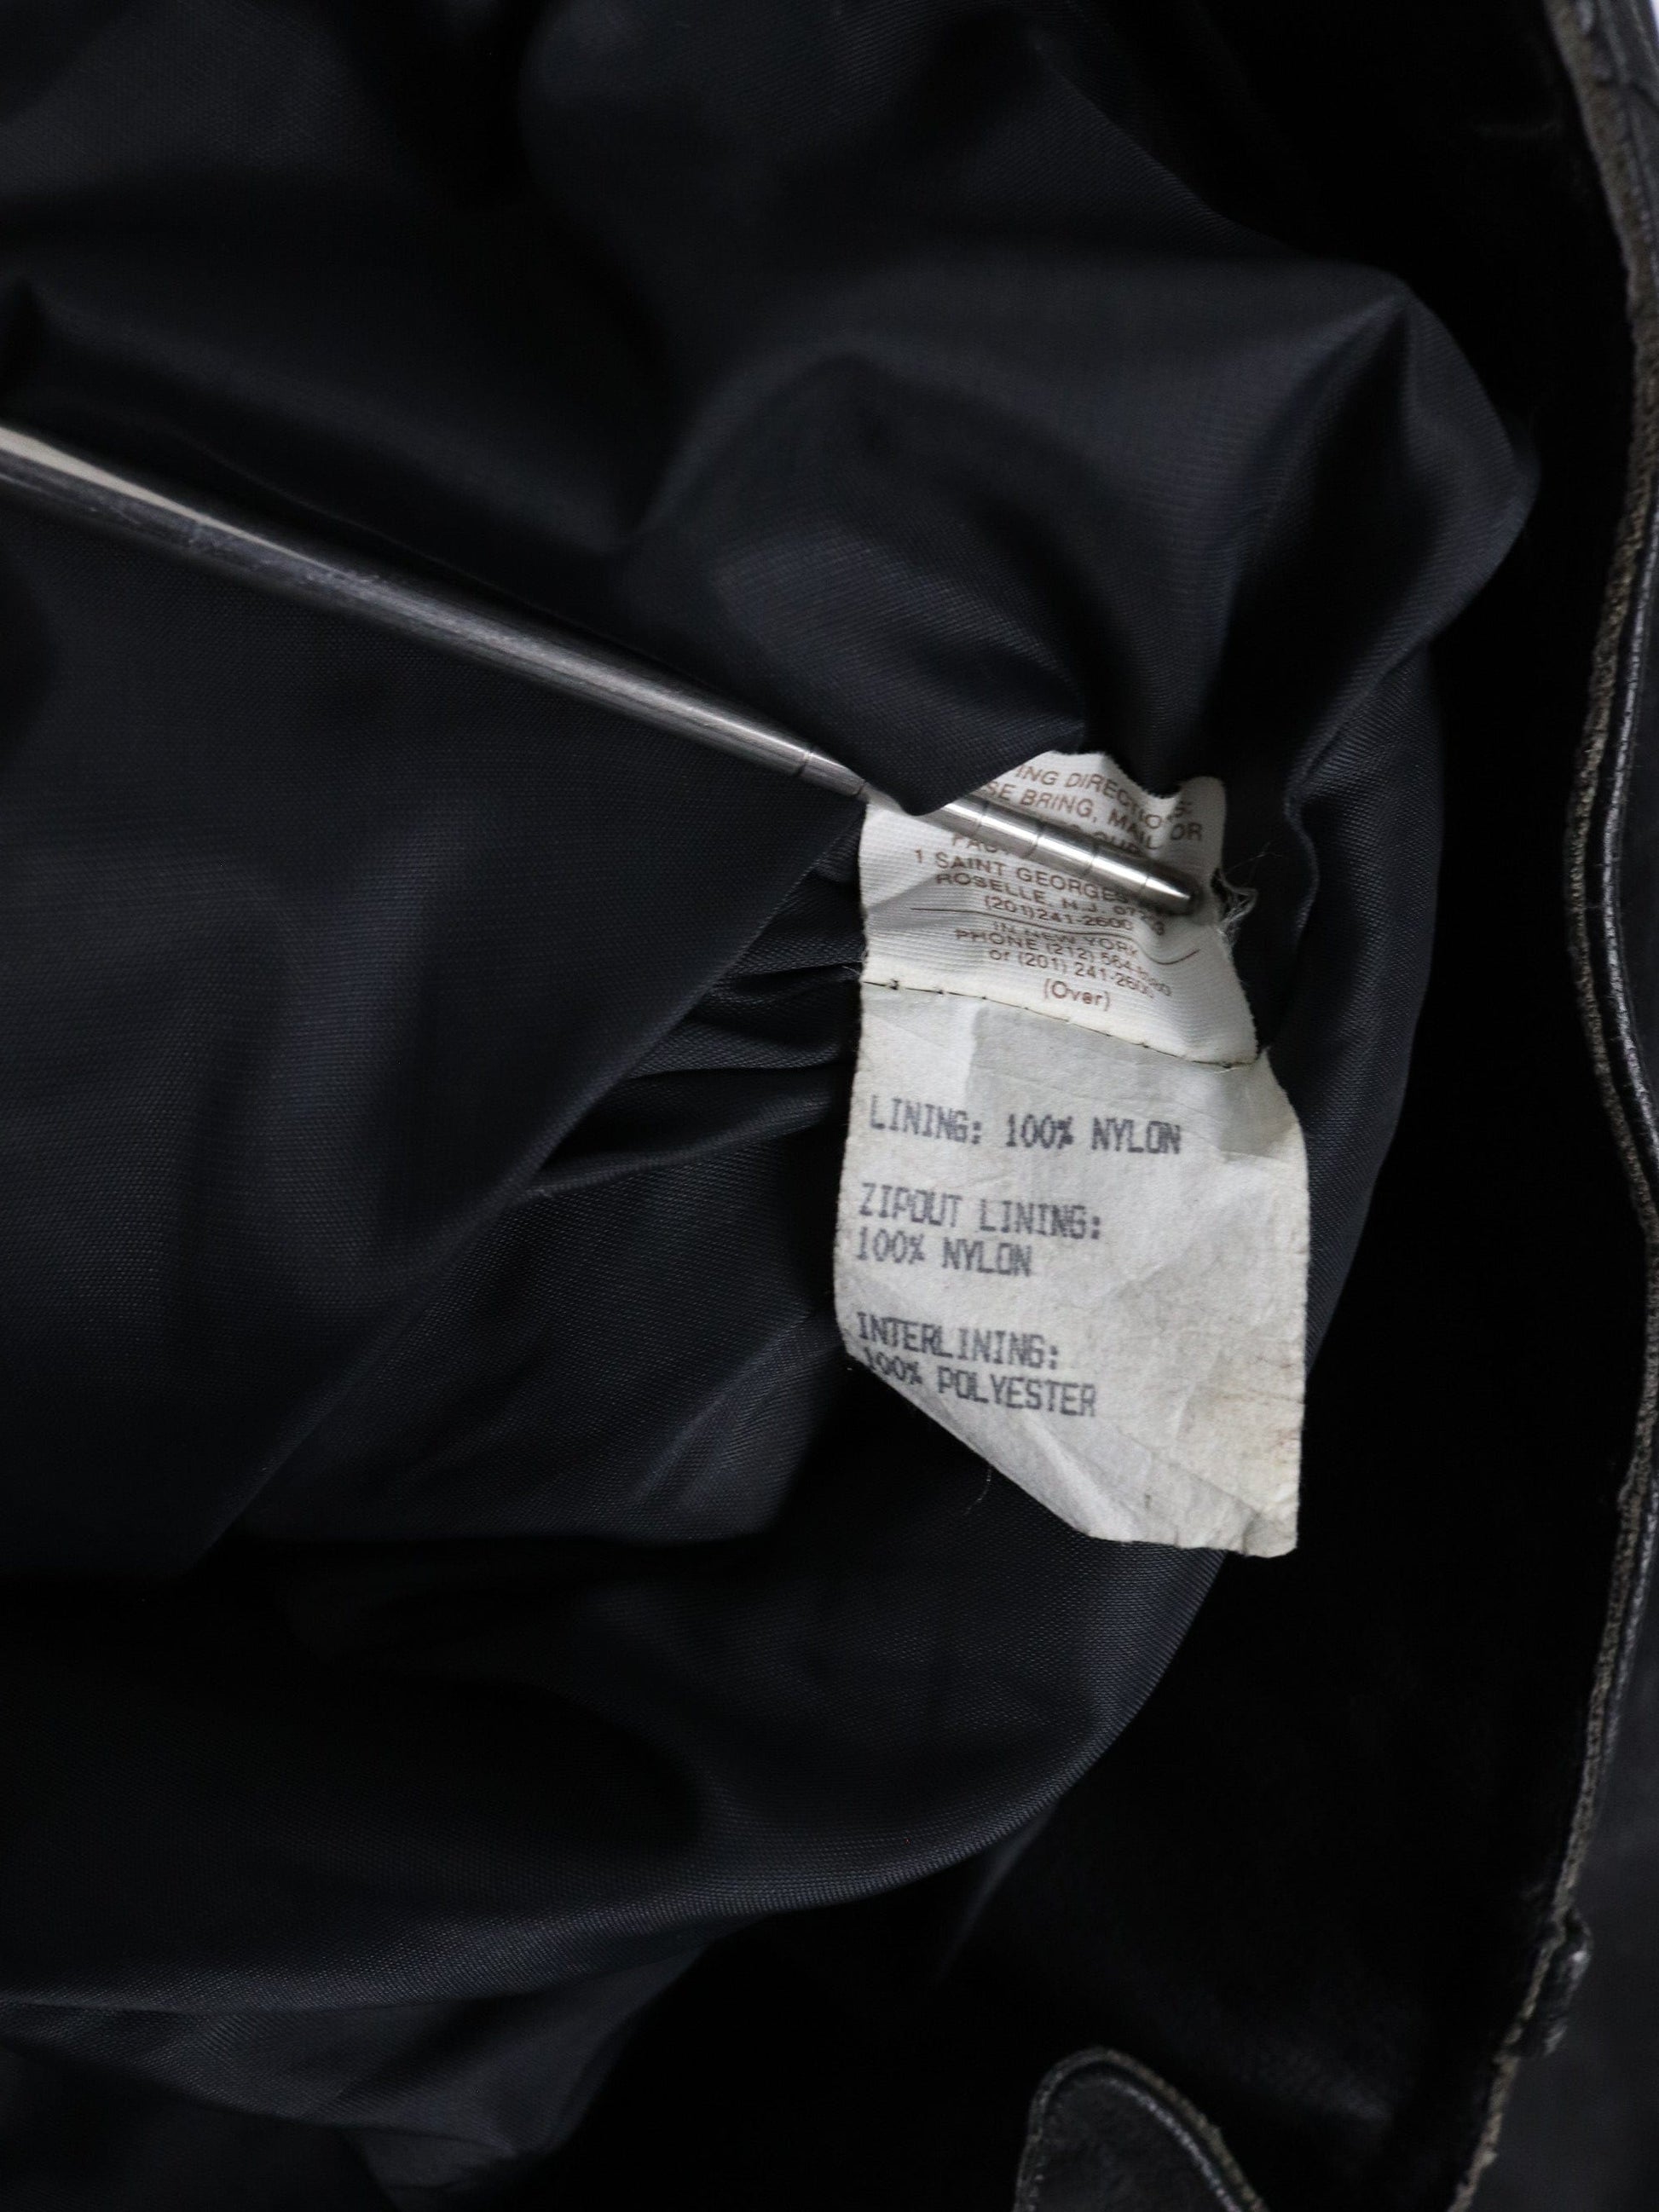 Other Jackets & Coats Vintage Leather Jacket Mens 42 Medium Black Biker Moto